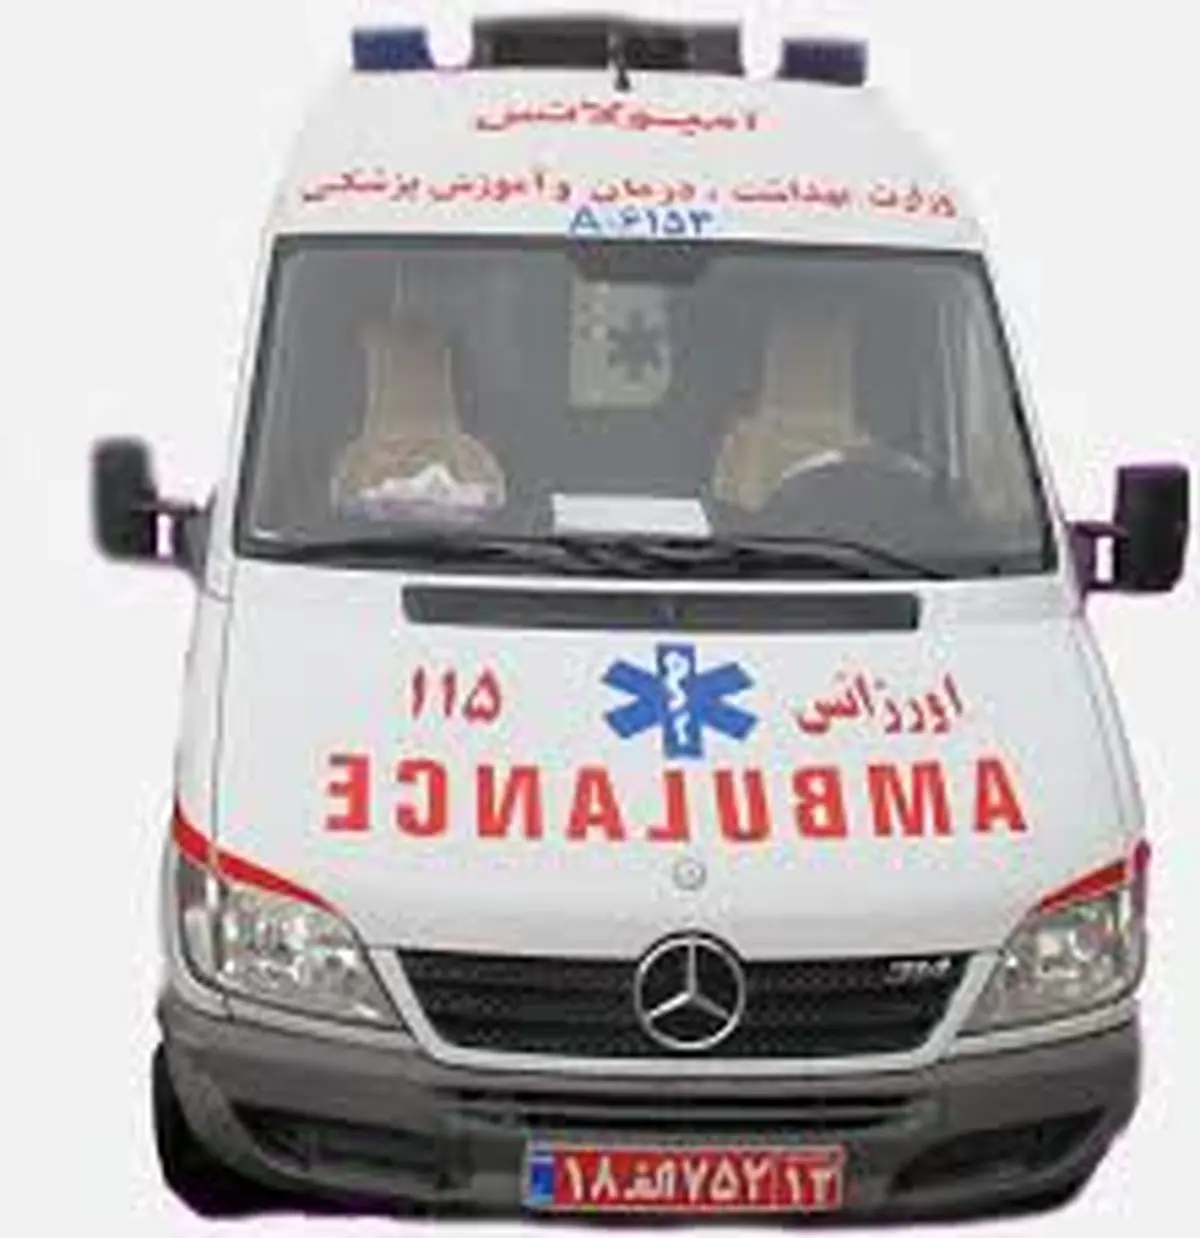 امداد رسانان آمبولانس اسفراین اورژانسی شدند